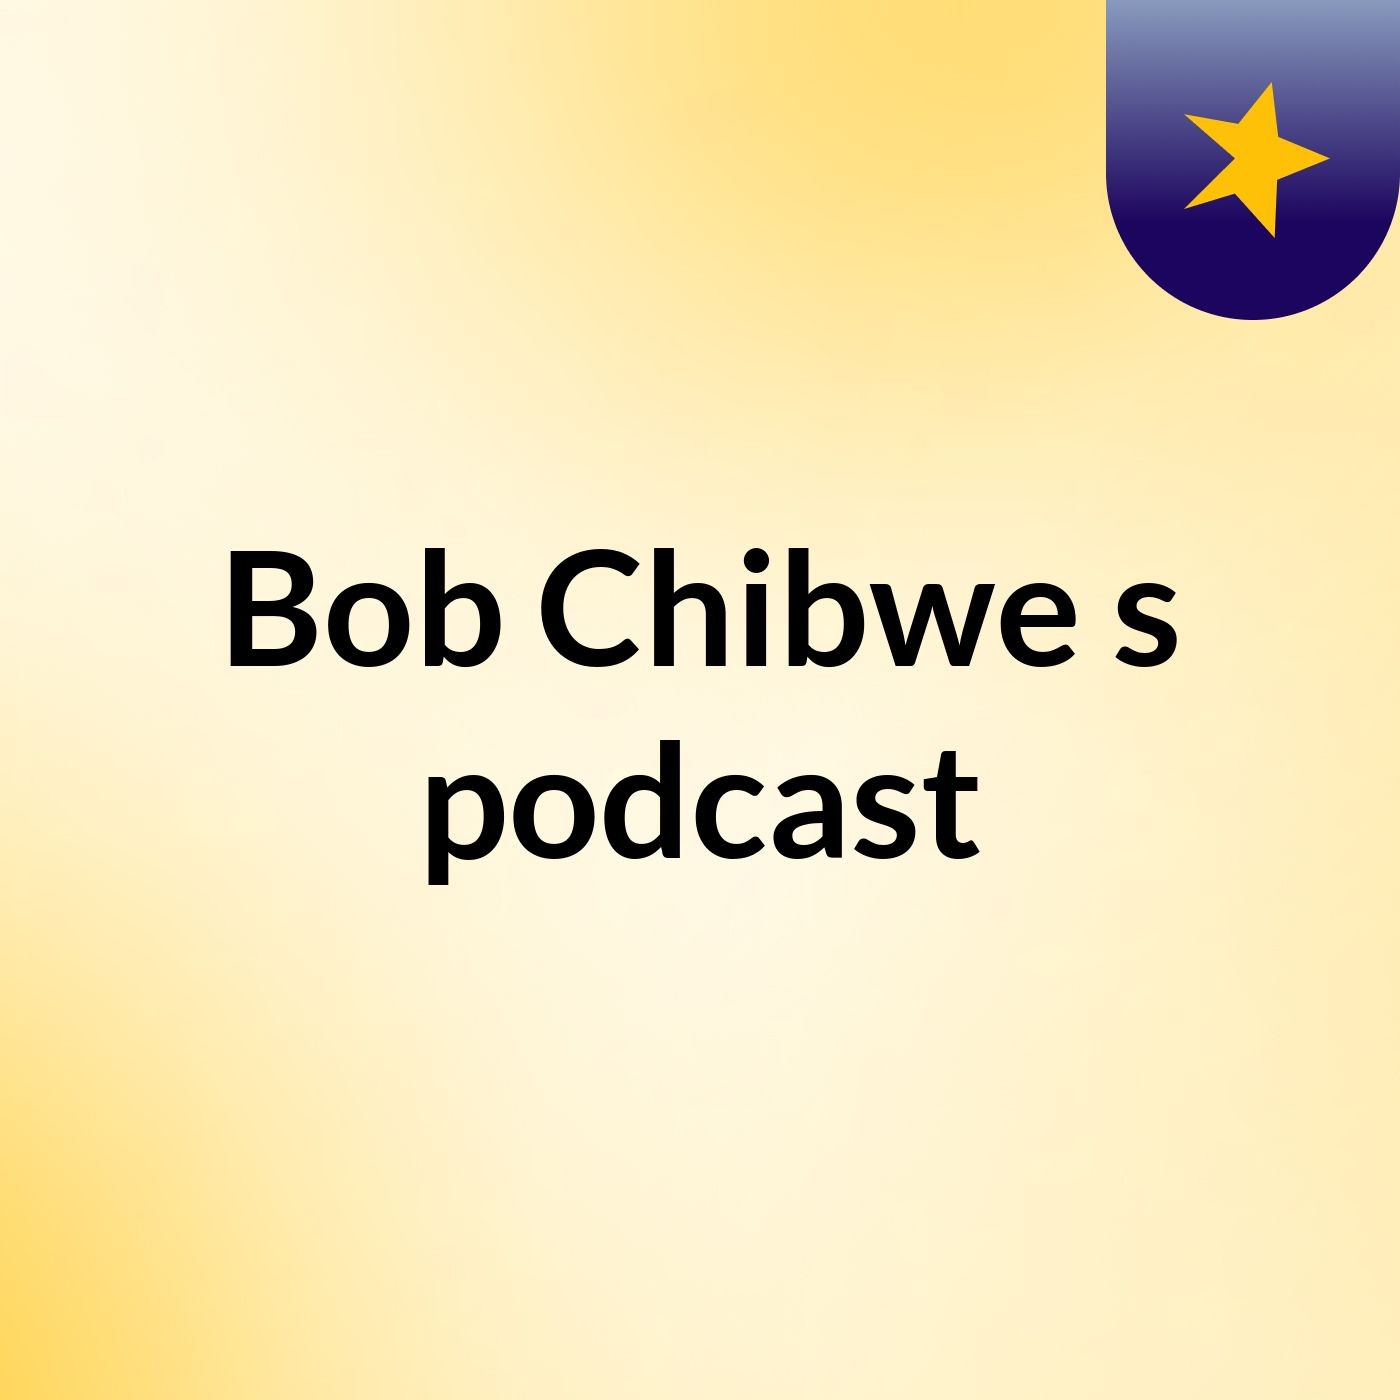 Trebor Xee(Bob Chibwe) podcast